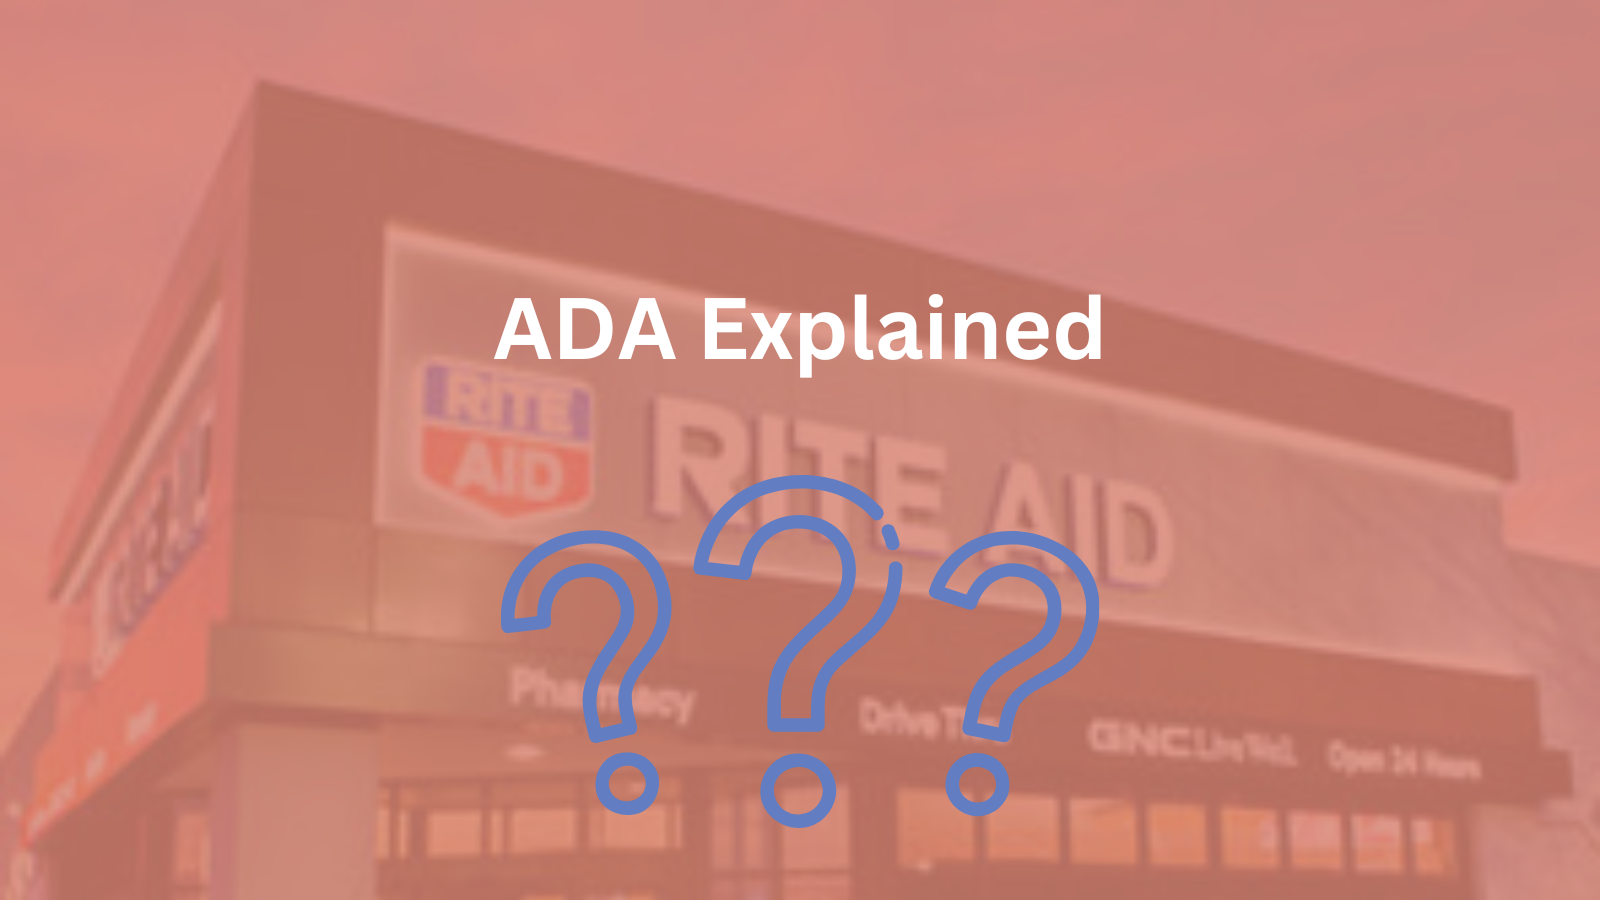 Image Text: "ADA Explained"